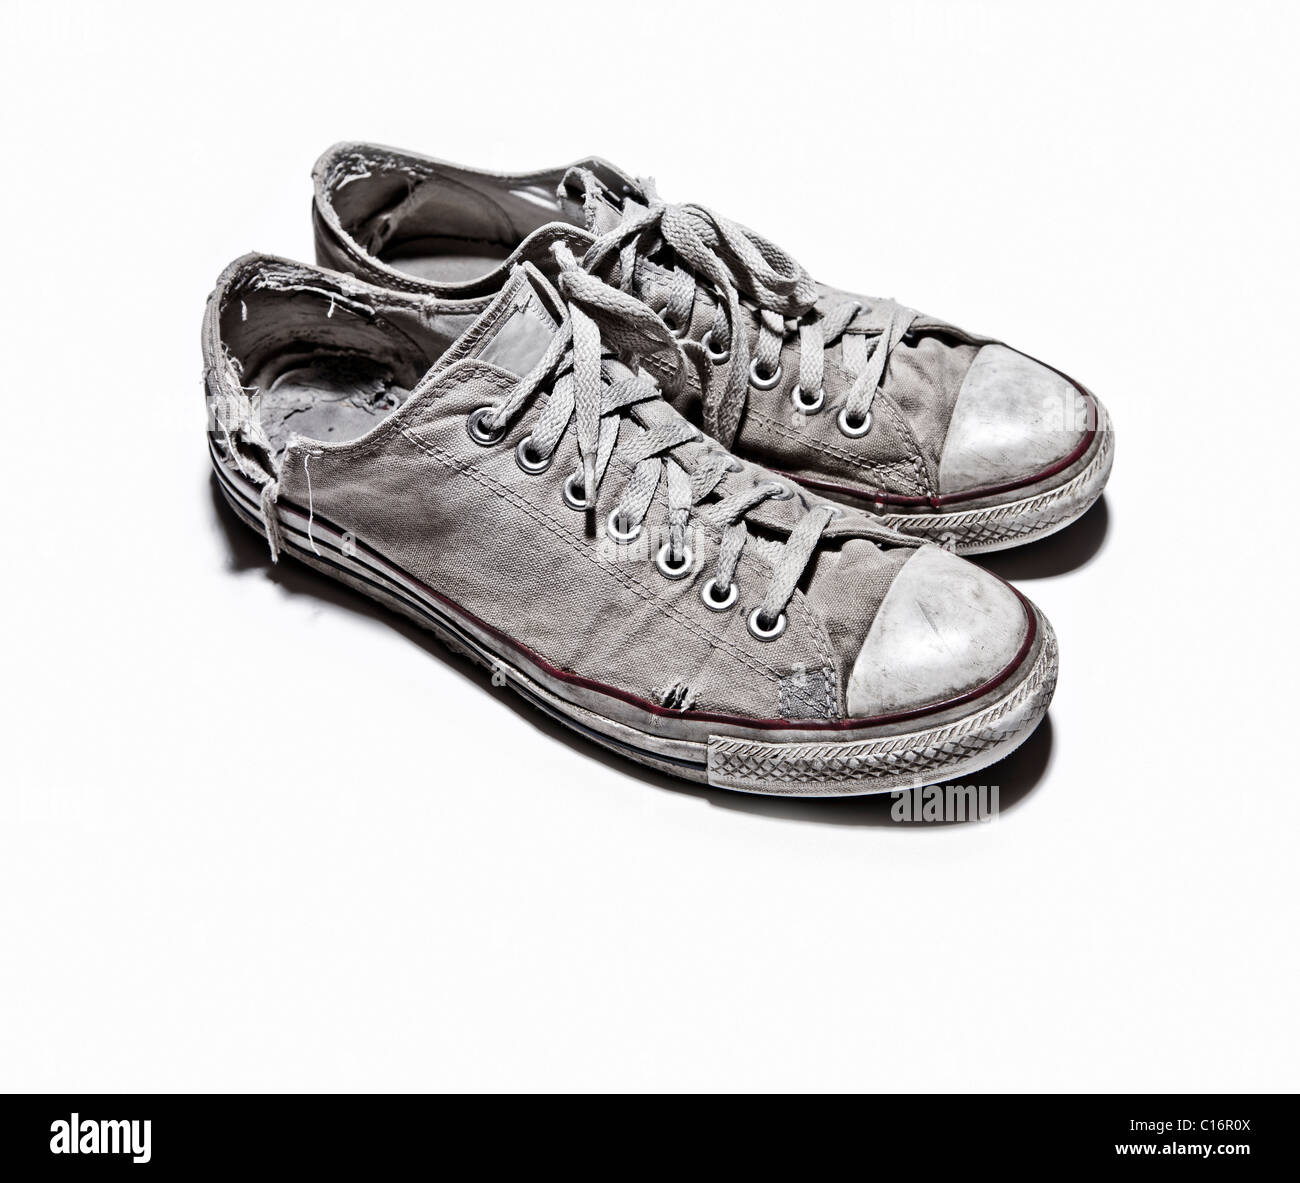 Ein paar Converse All Star Schuhe Stockfotografie - Alamy